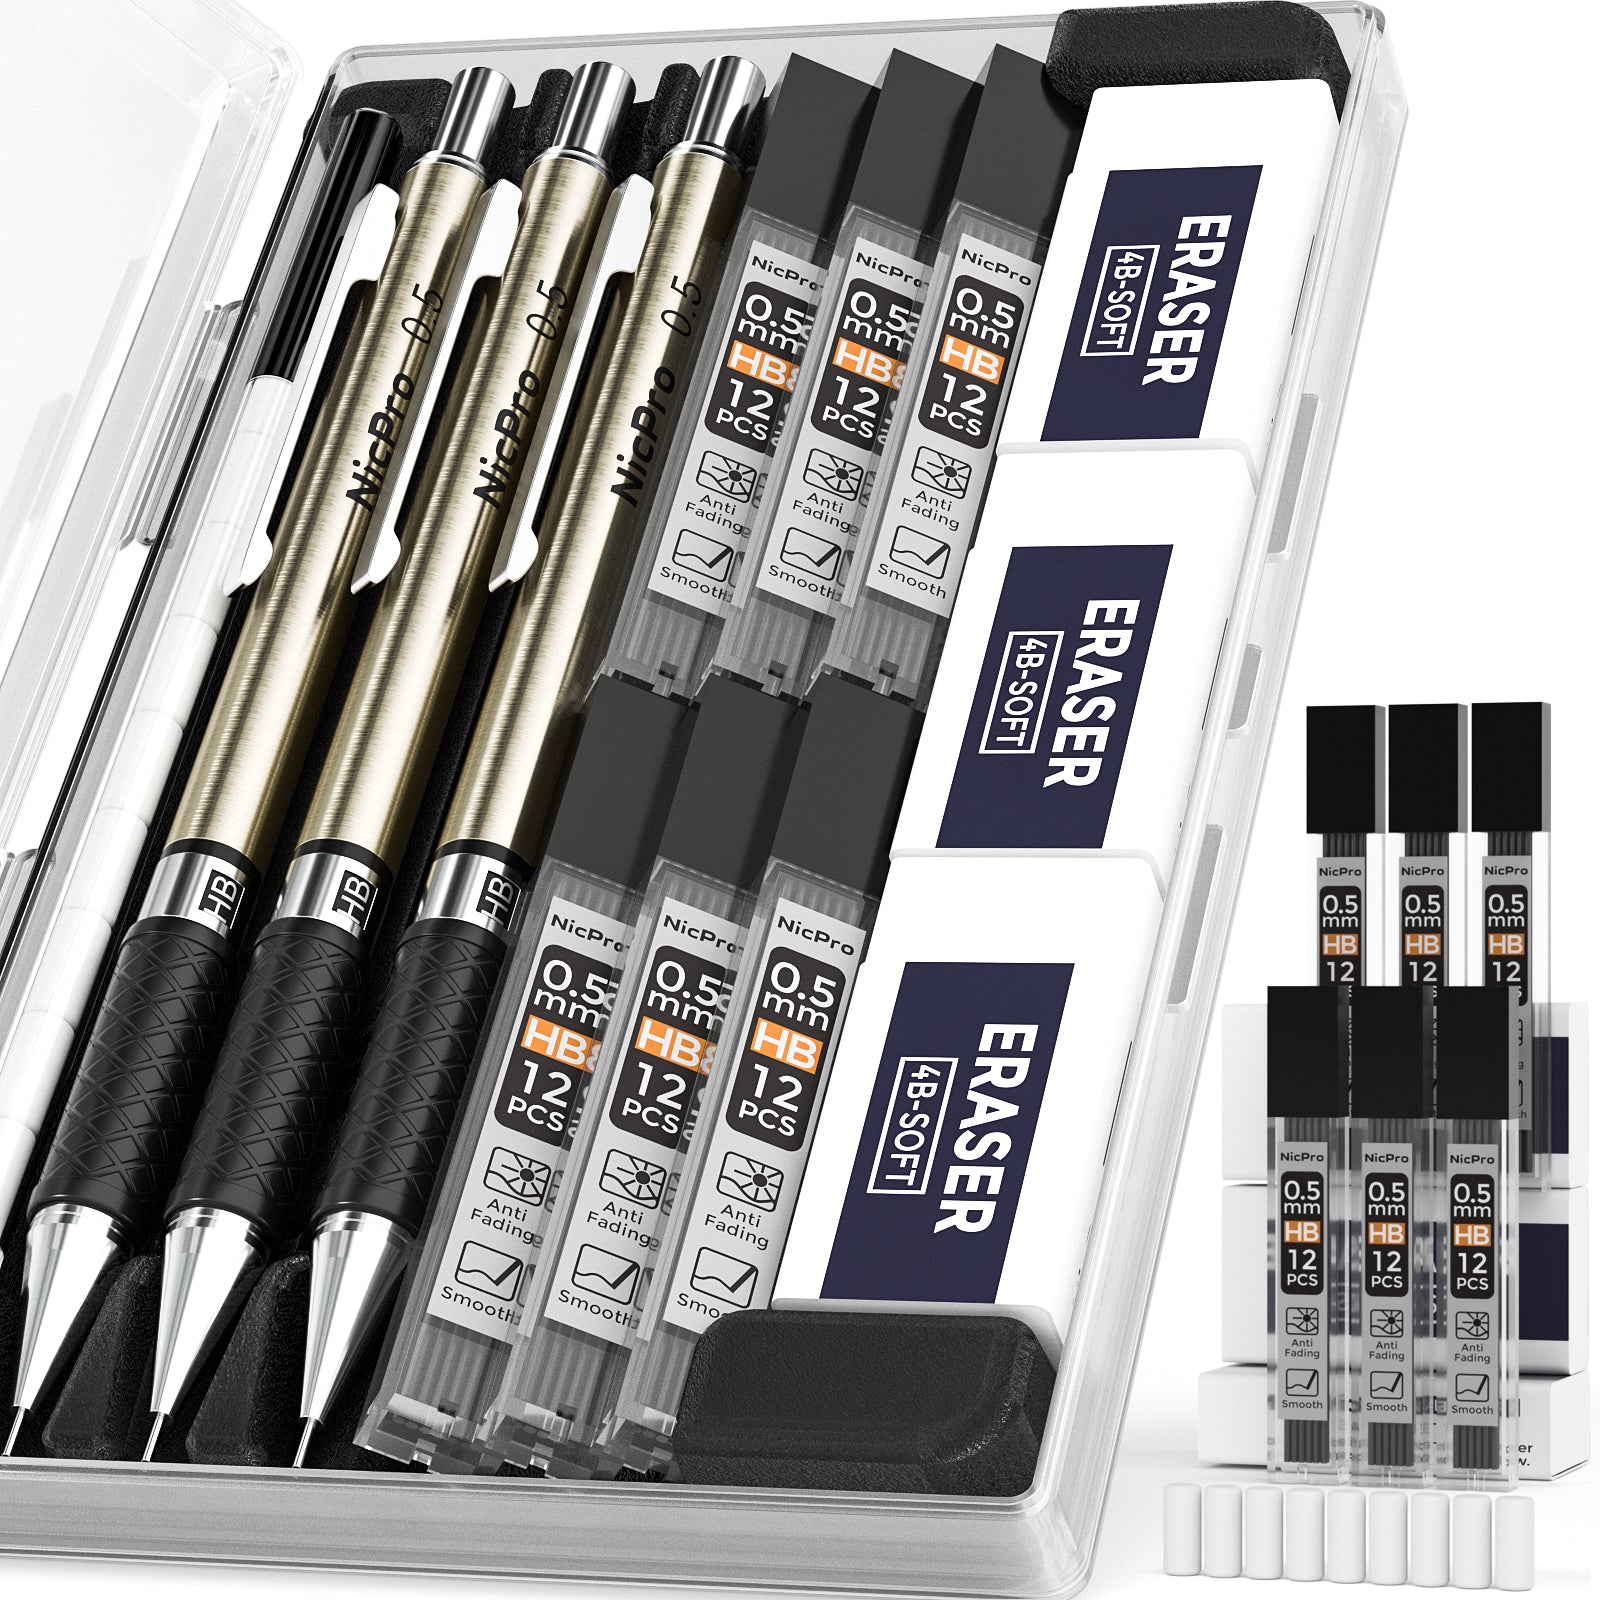 Nicpro 0.5 mm Art Mechanical Pencils Set in Storage Case, 3 PCS Metal